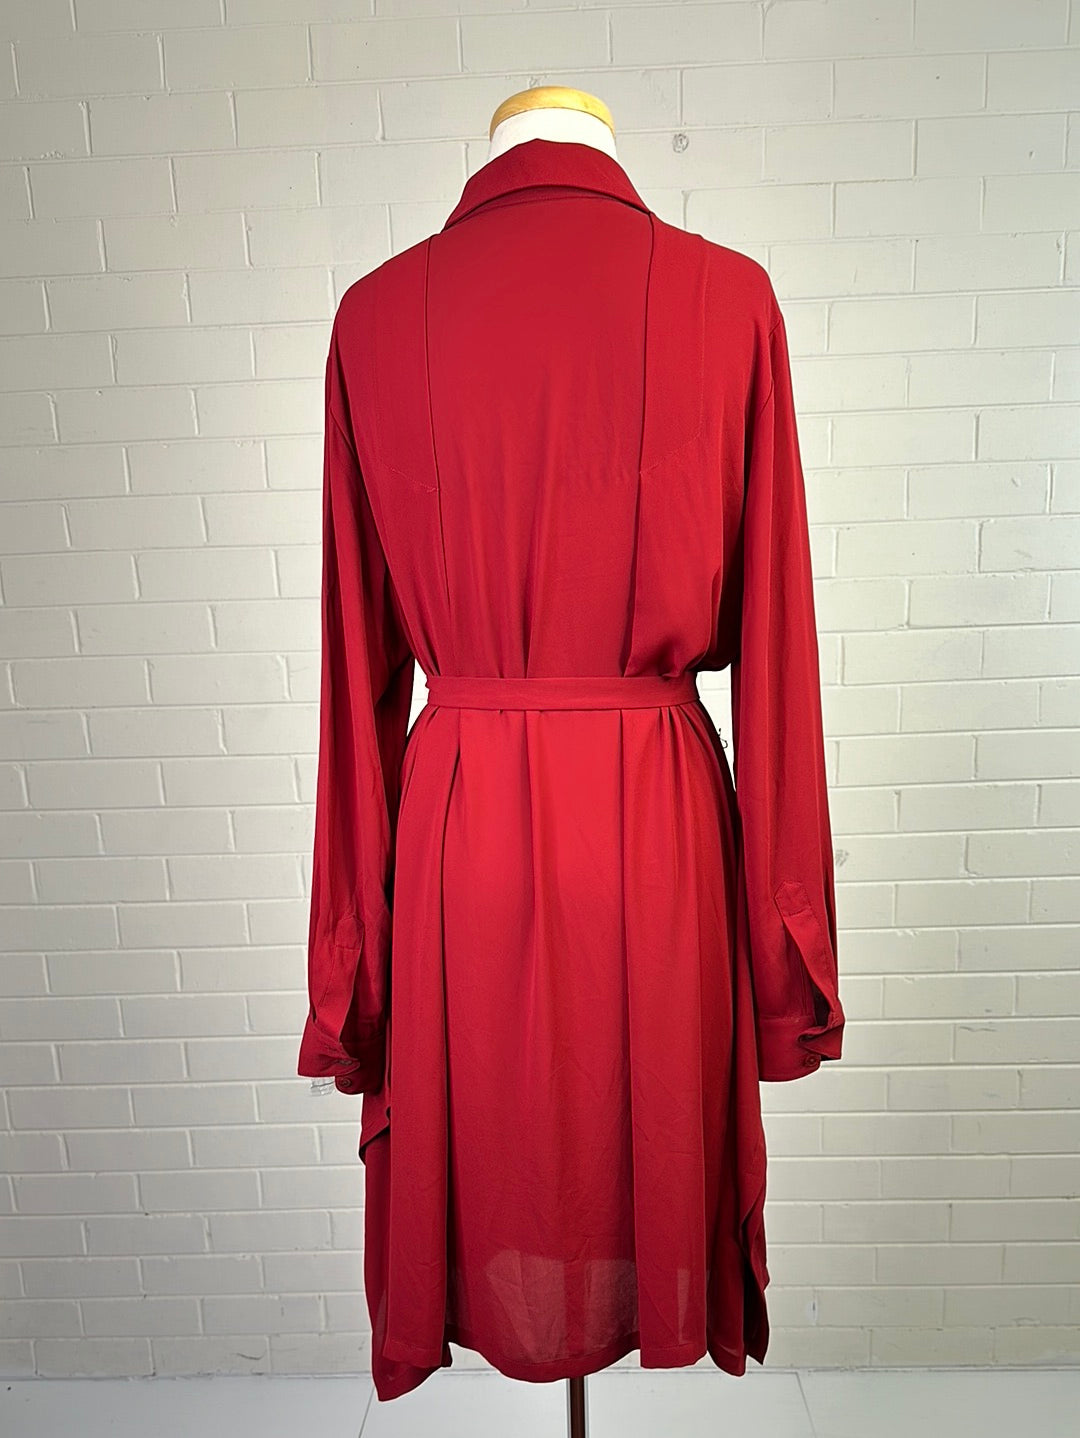 Karen Millen | UK | dress | size 14 | midi length